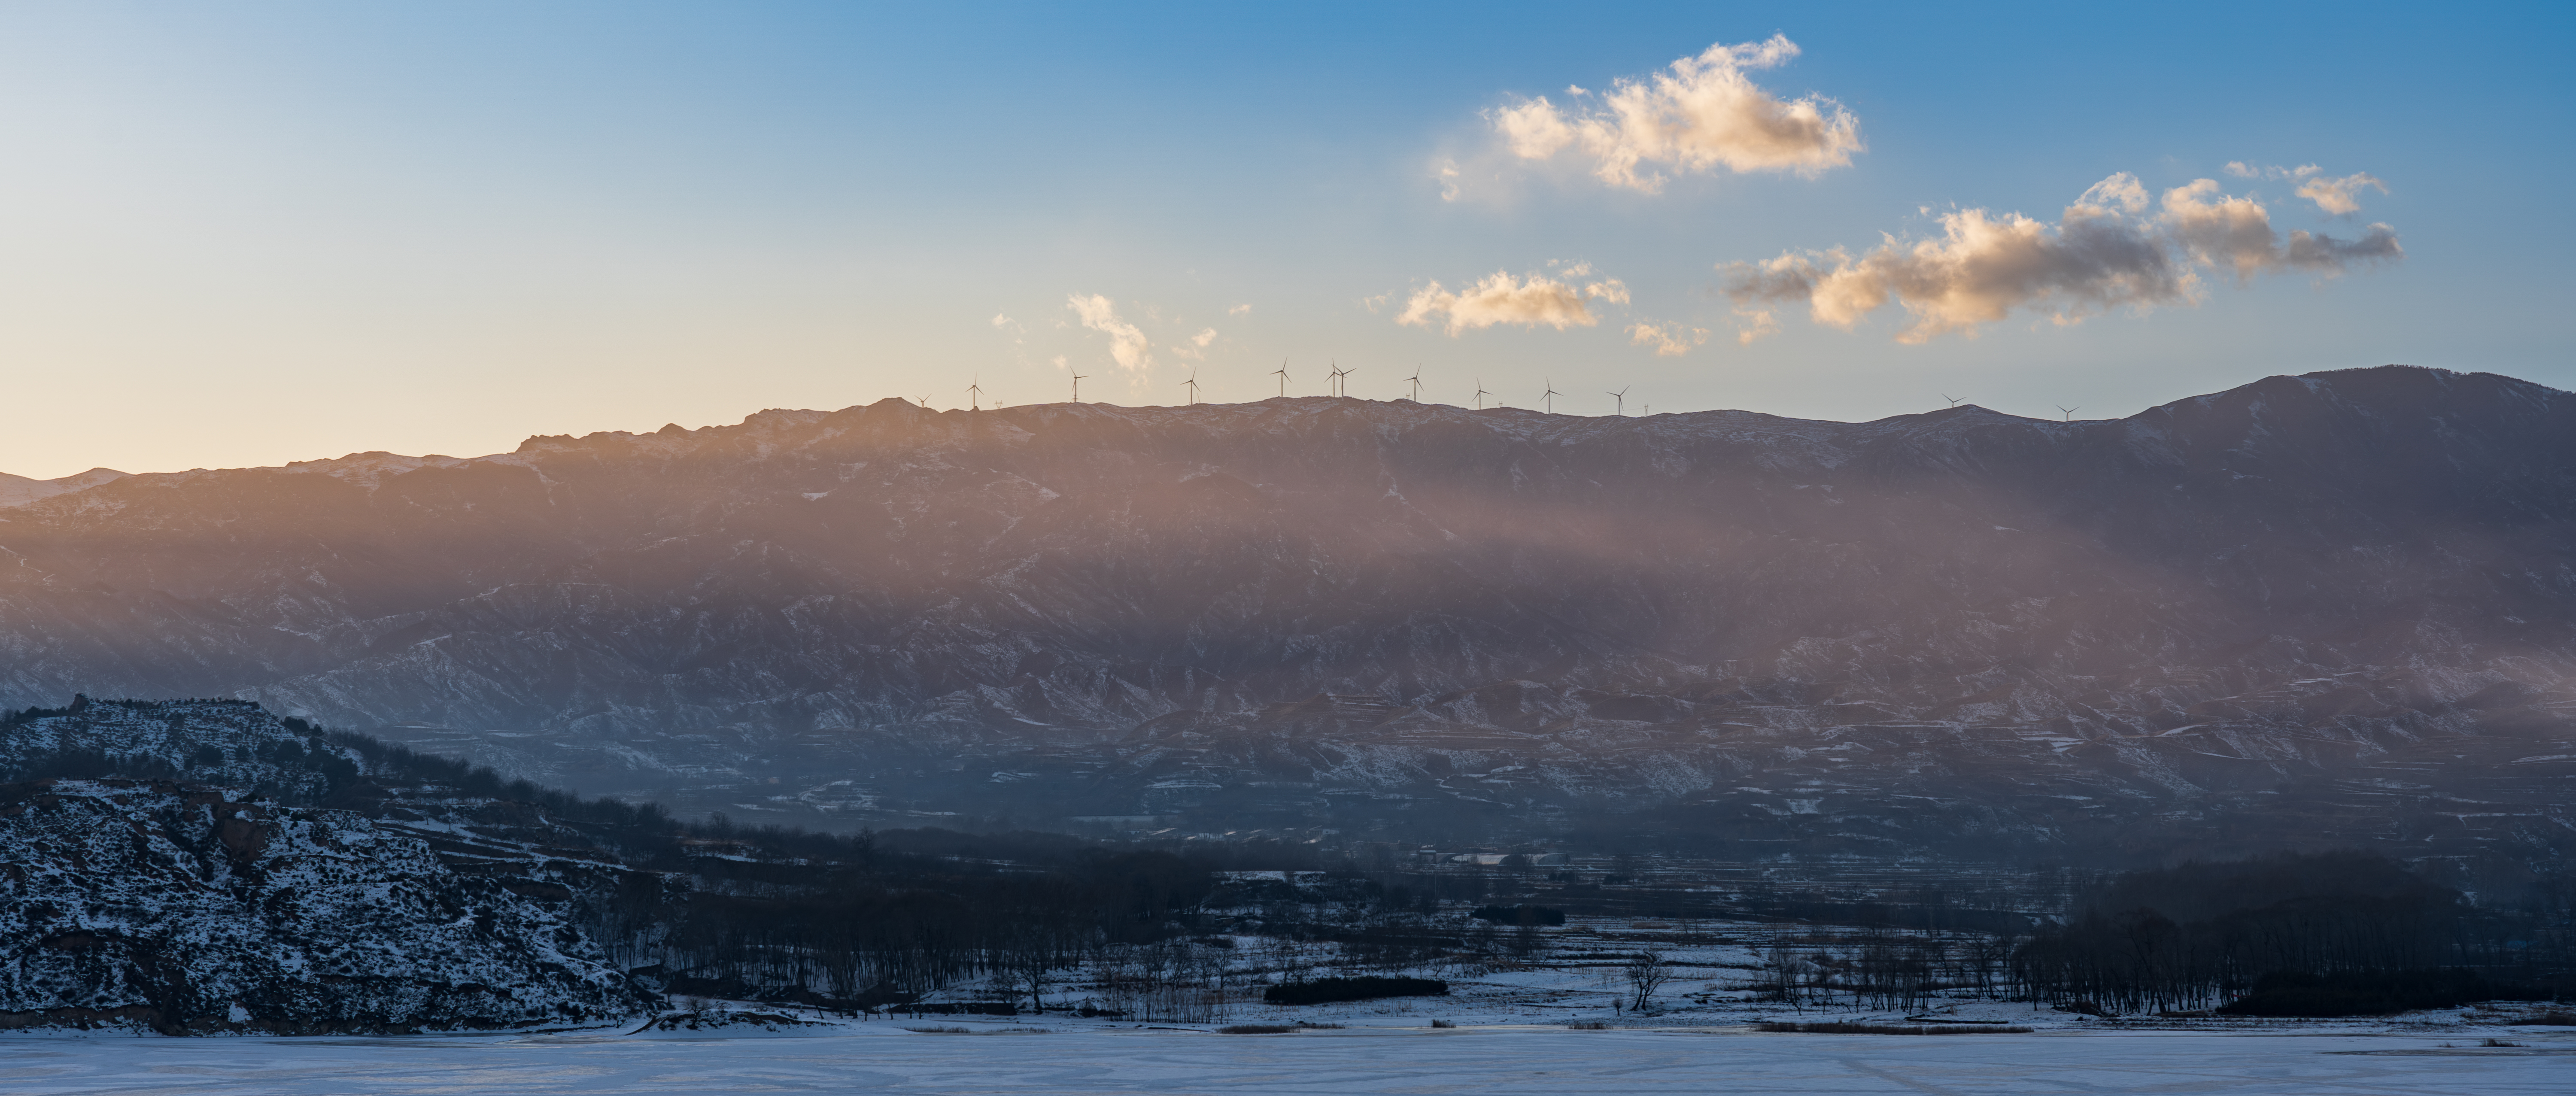 General 6000x2553 mountains wind turbine snow ultrawide sky mist sunlight clouds landscape outdoors